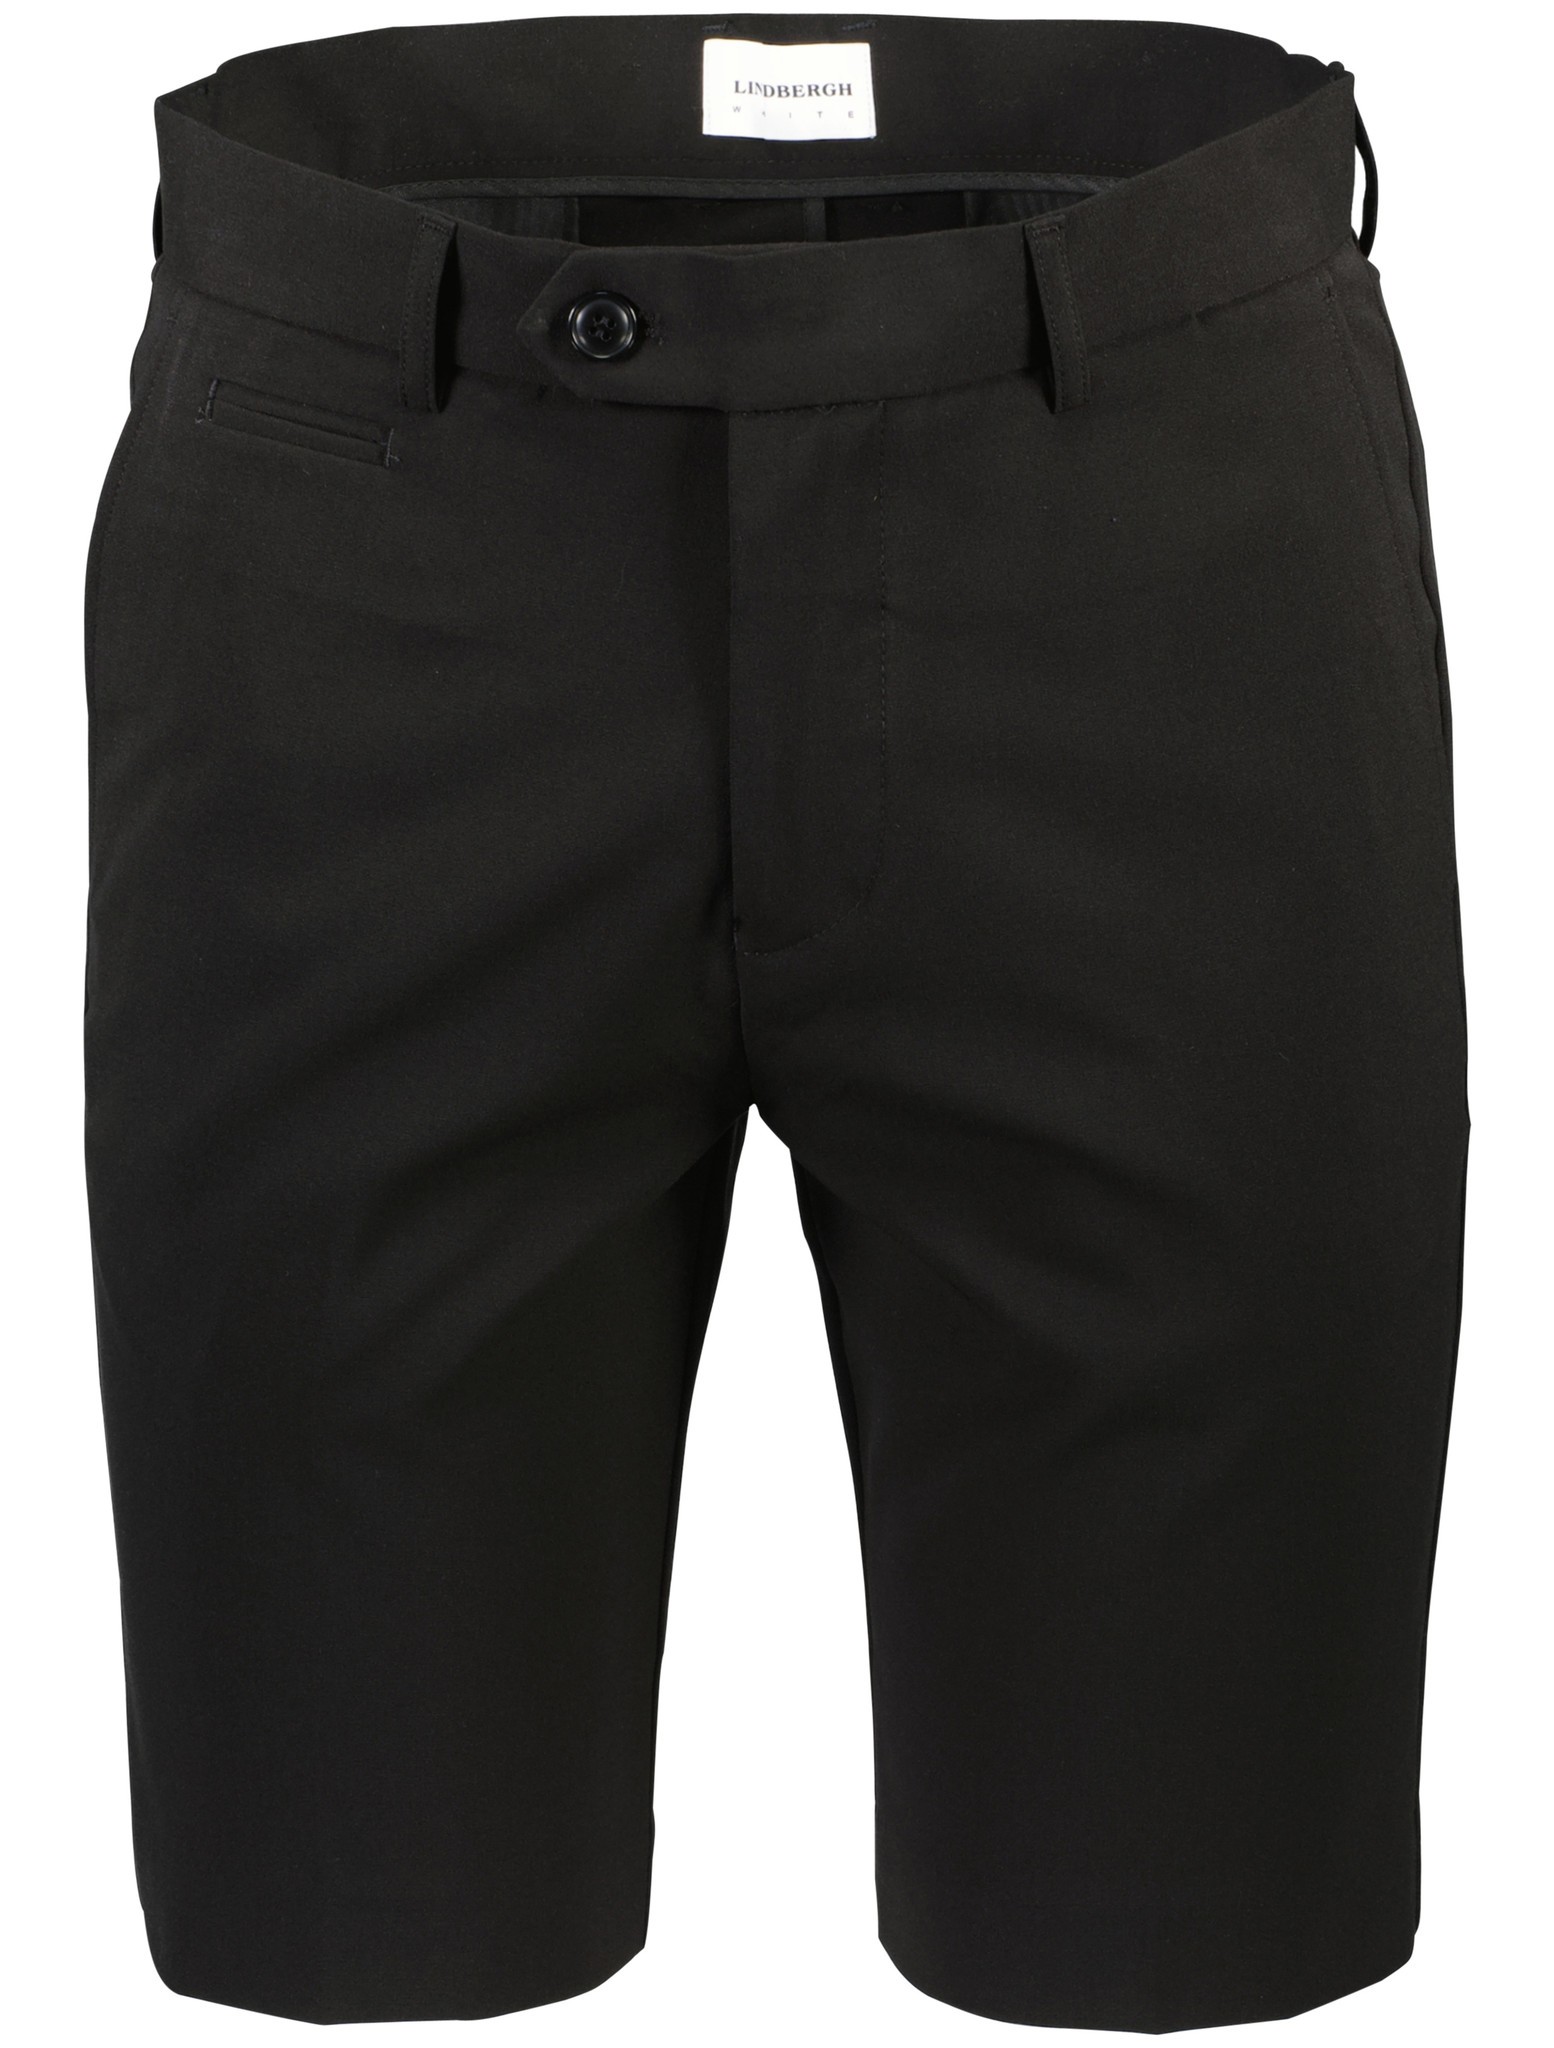 Club Shorts Style: 30-501011US